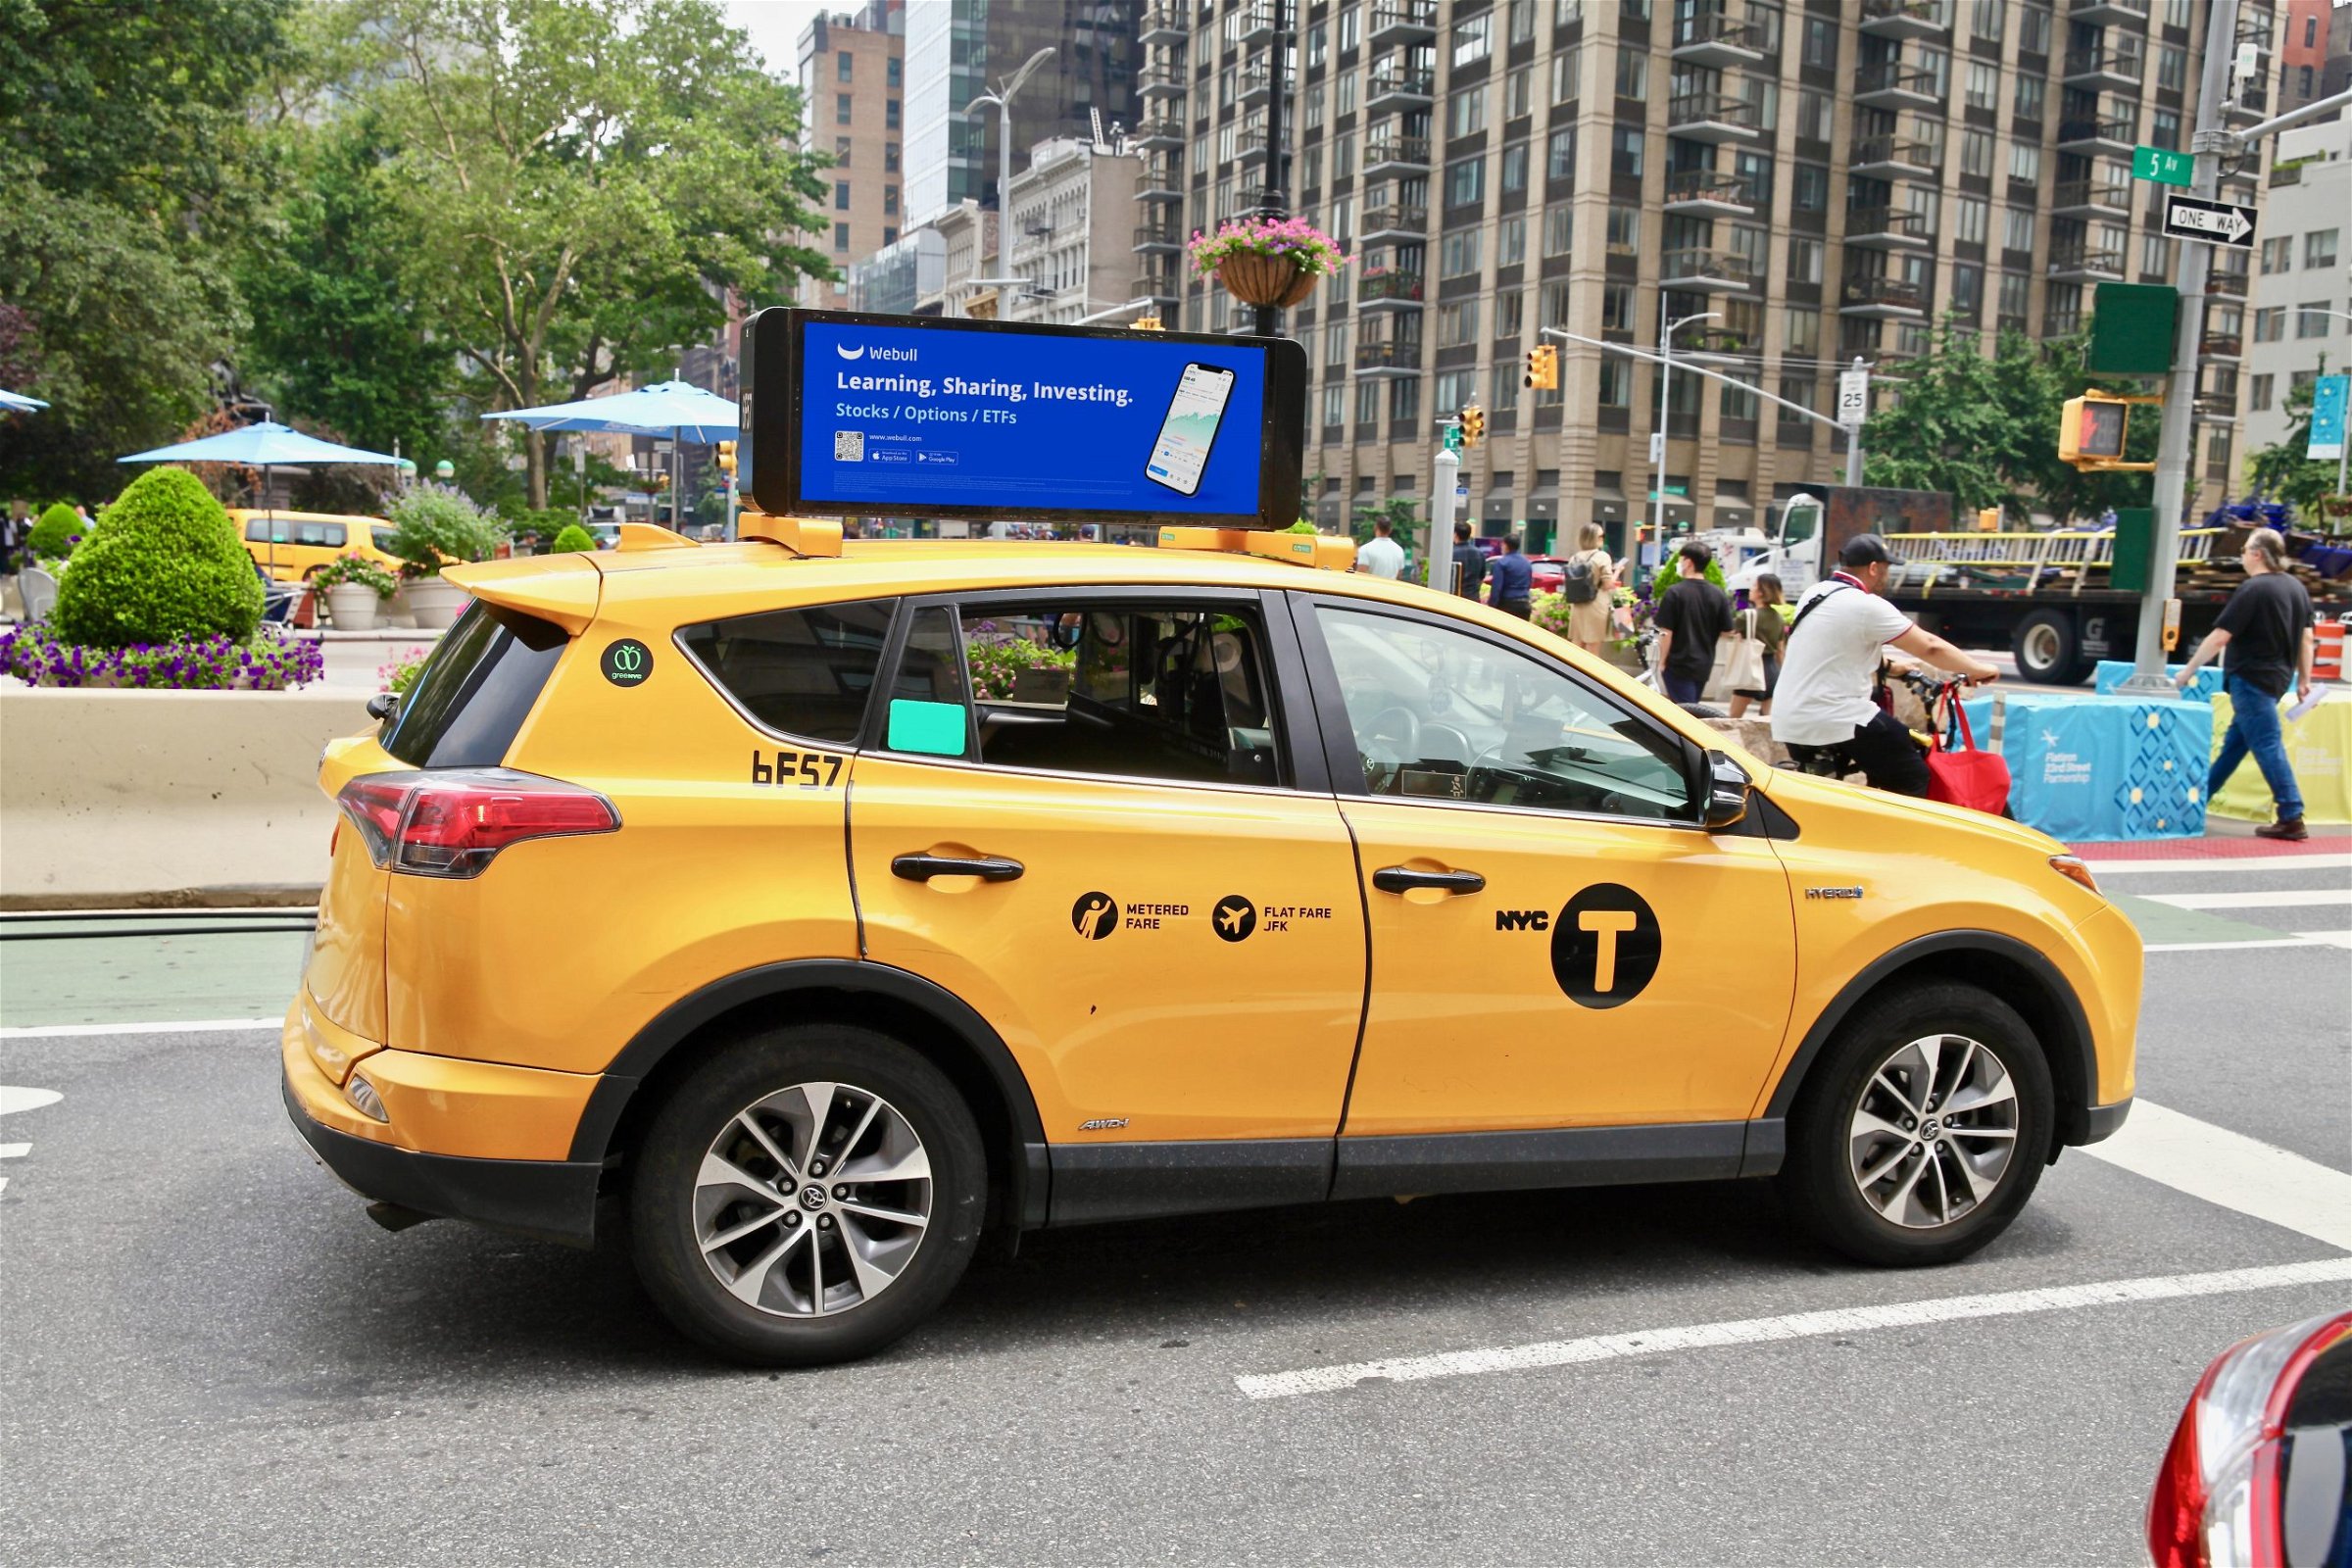 NYC Digital Taxi Top Advertising